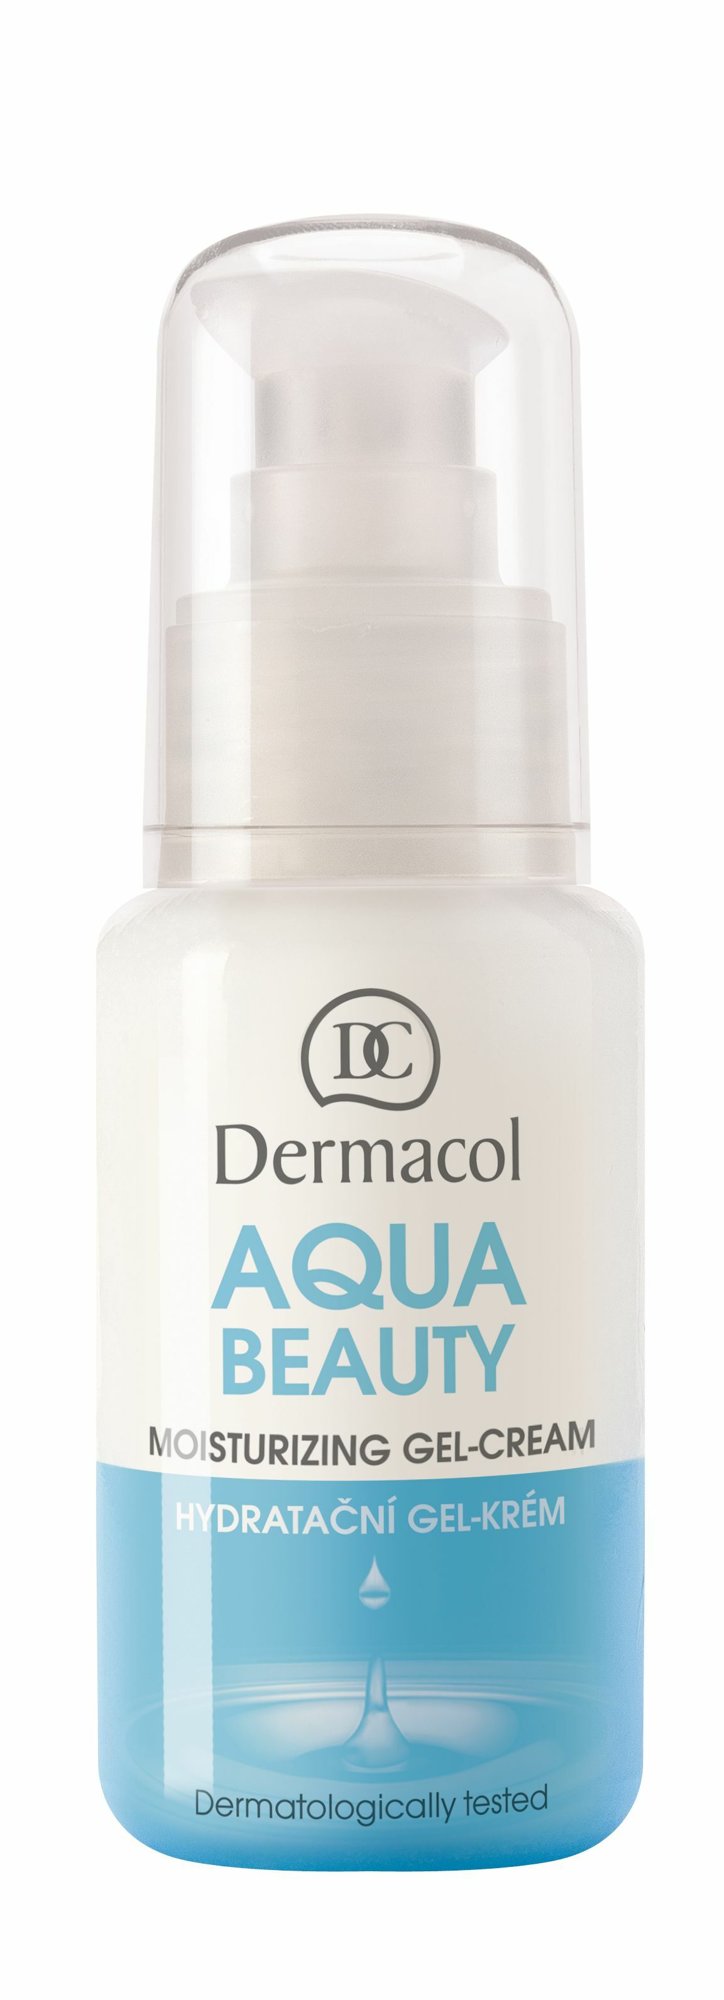 Dermacol Aqua Beauty 50ml veido gelis (Pažeista pakuotė)